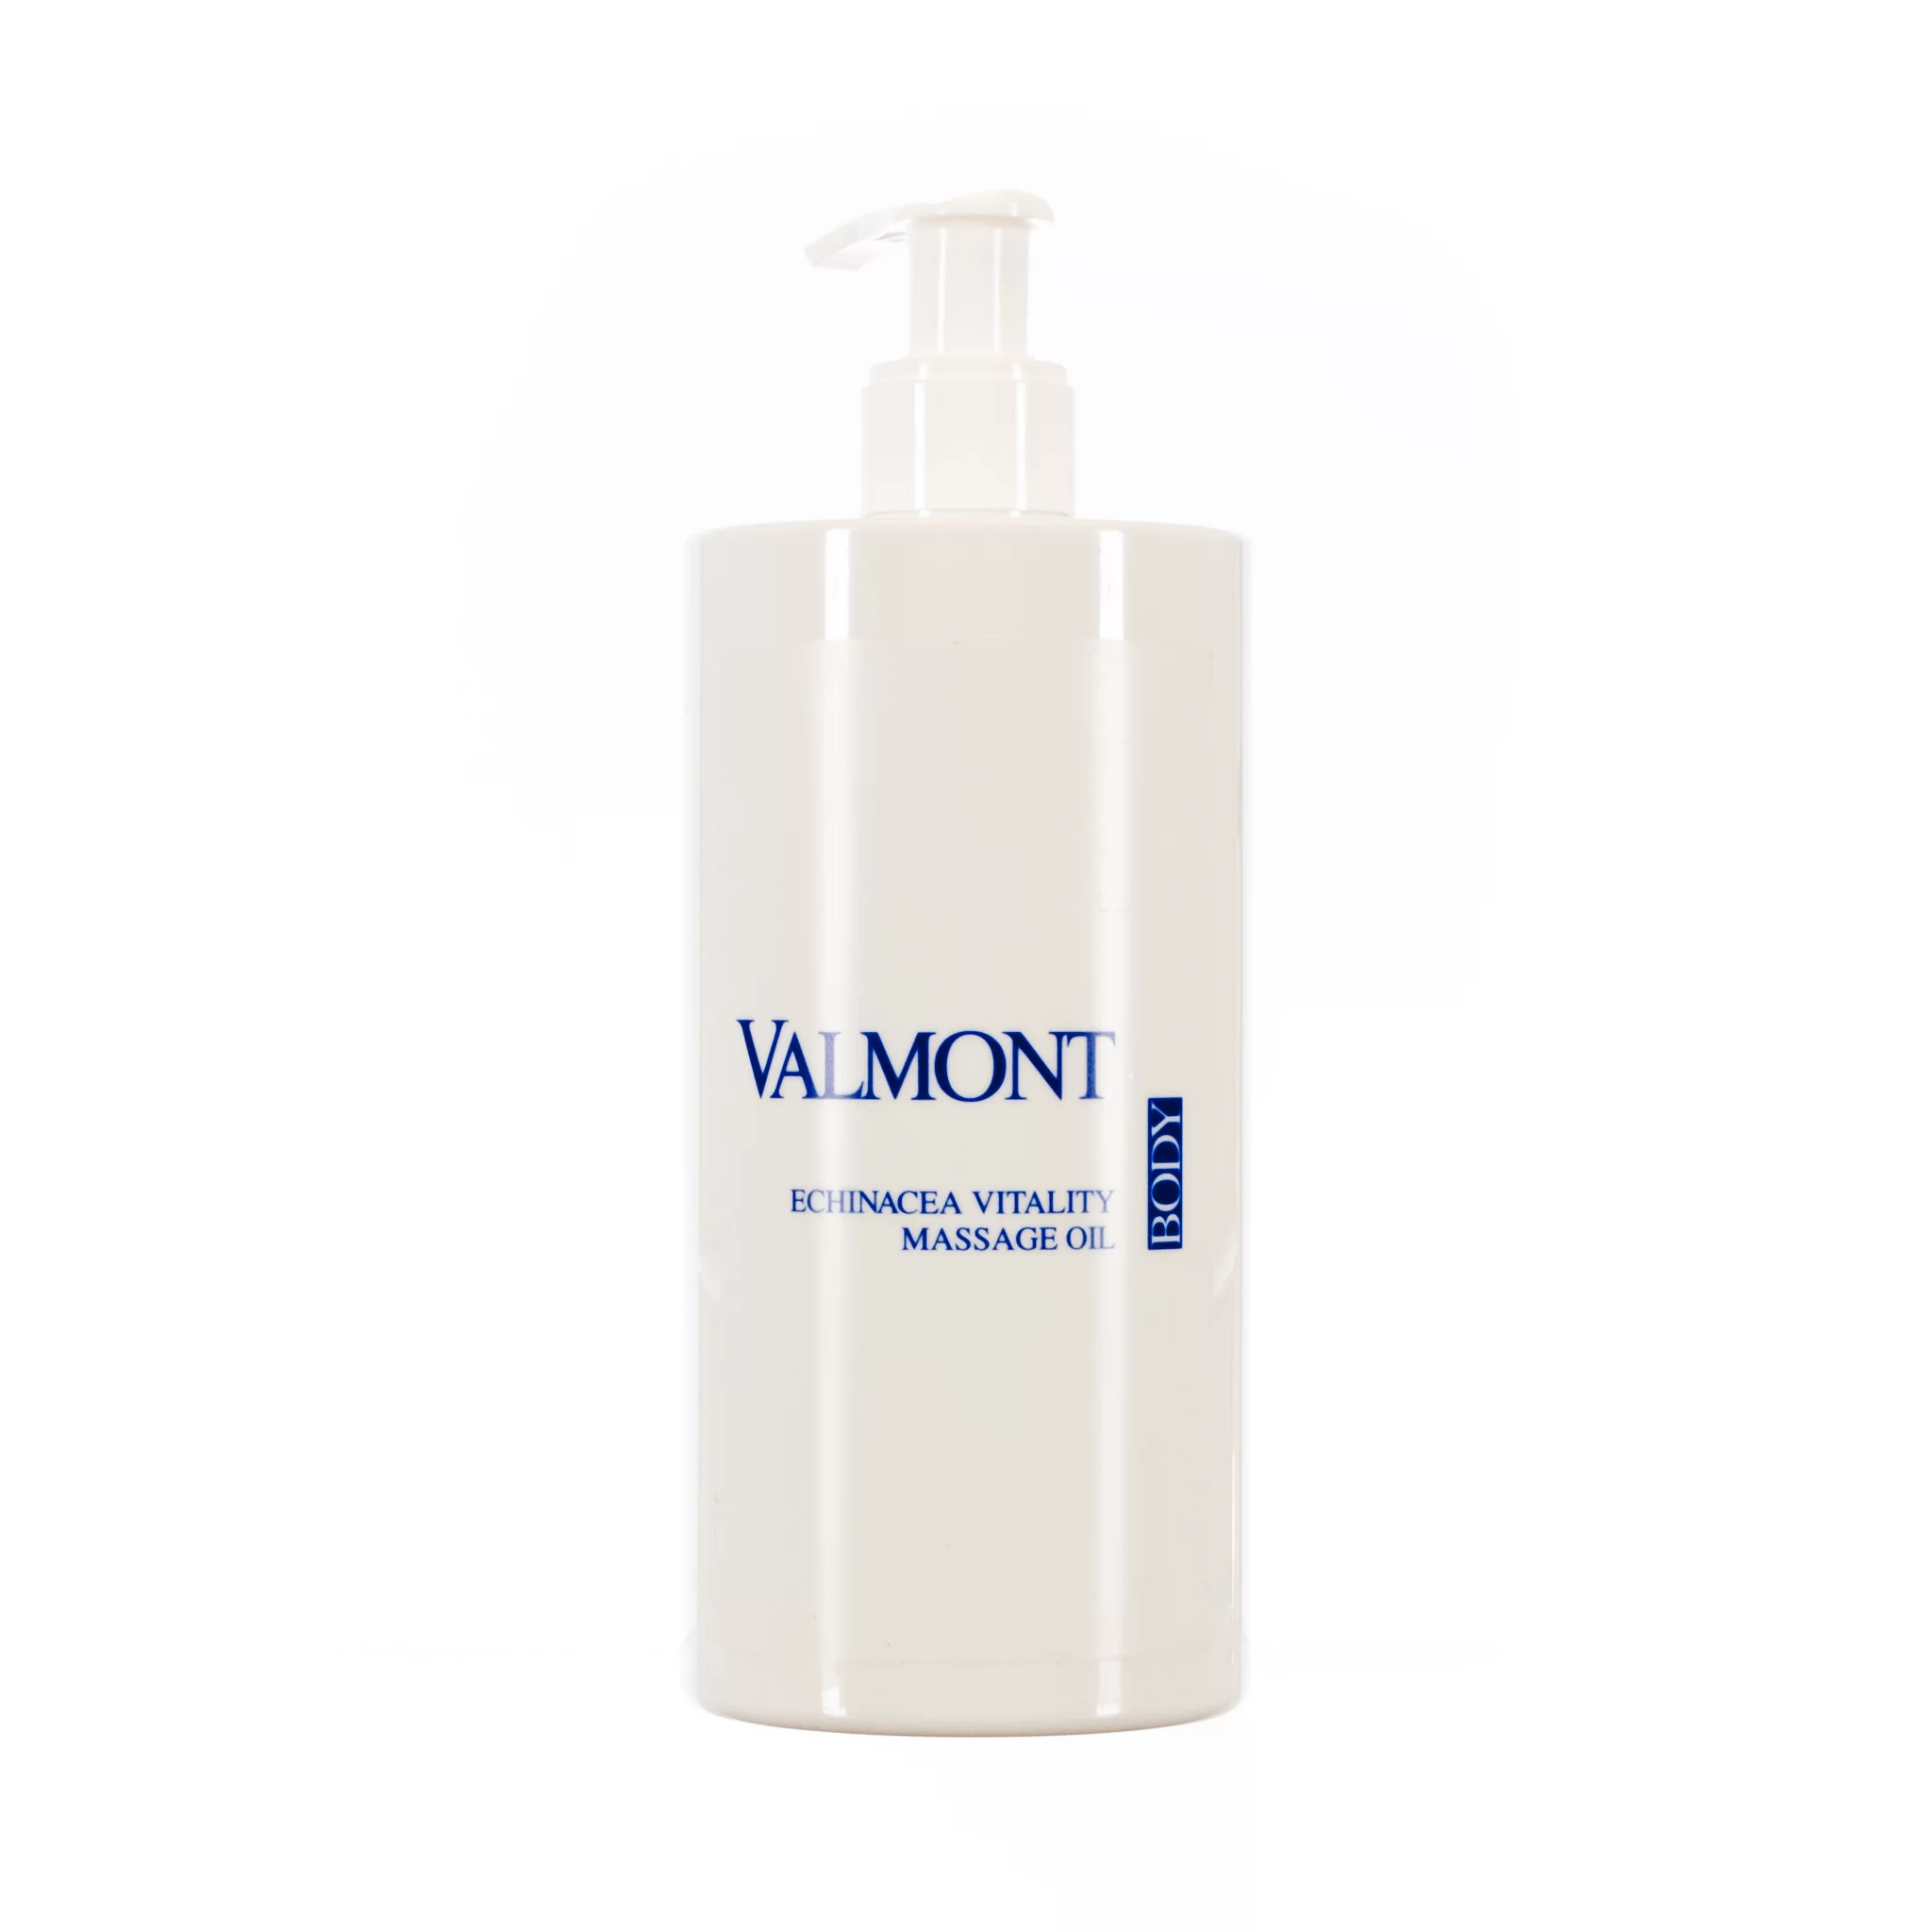 Valmont - Echinacea Vitality Massage Oil (500ml) 